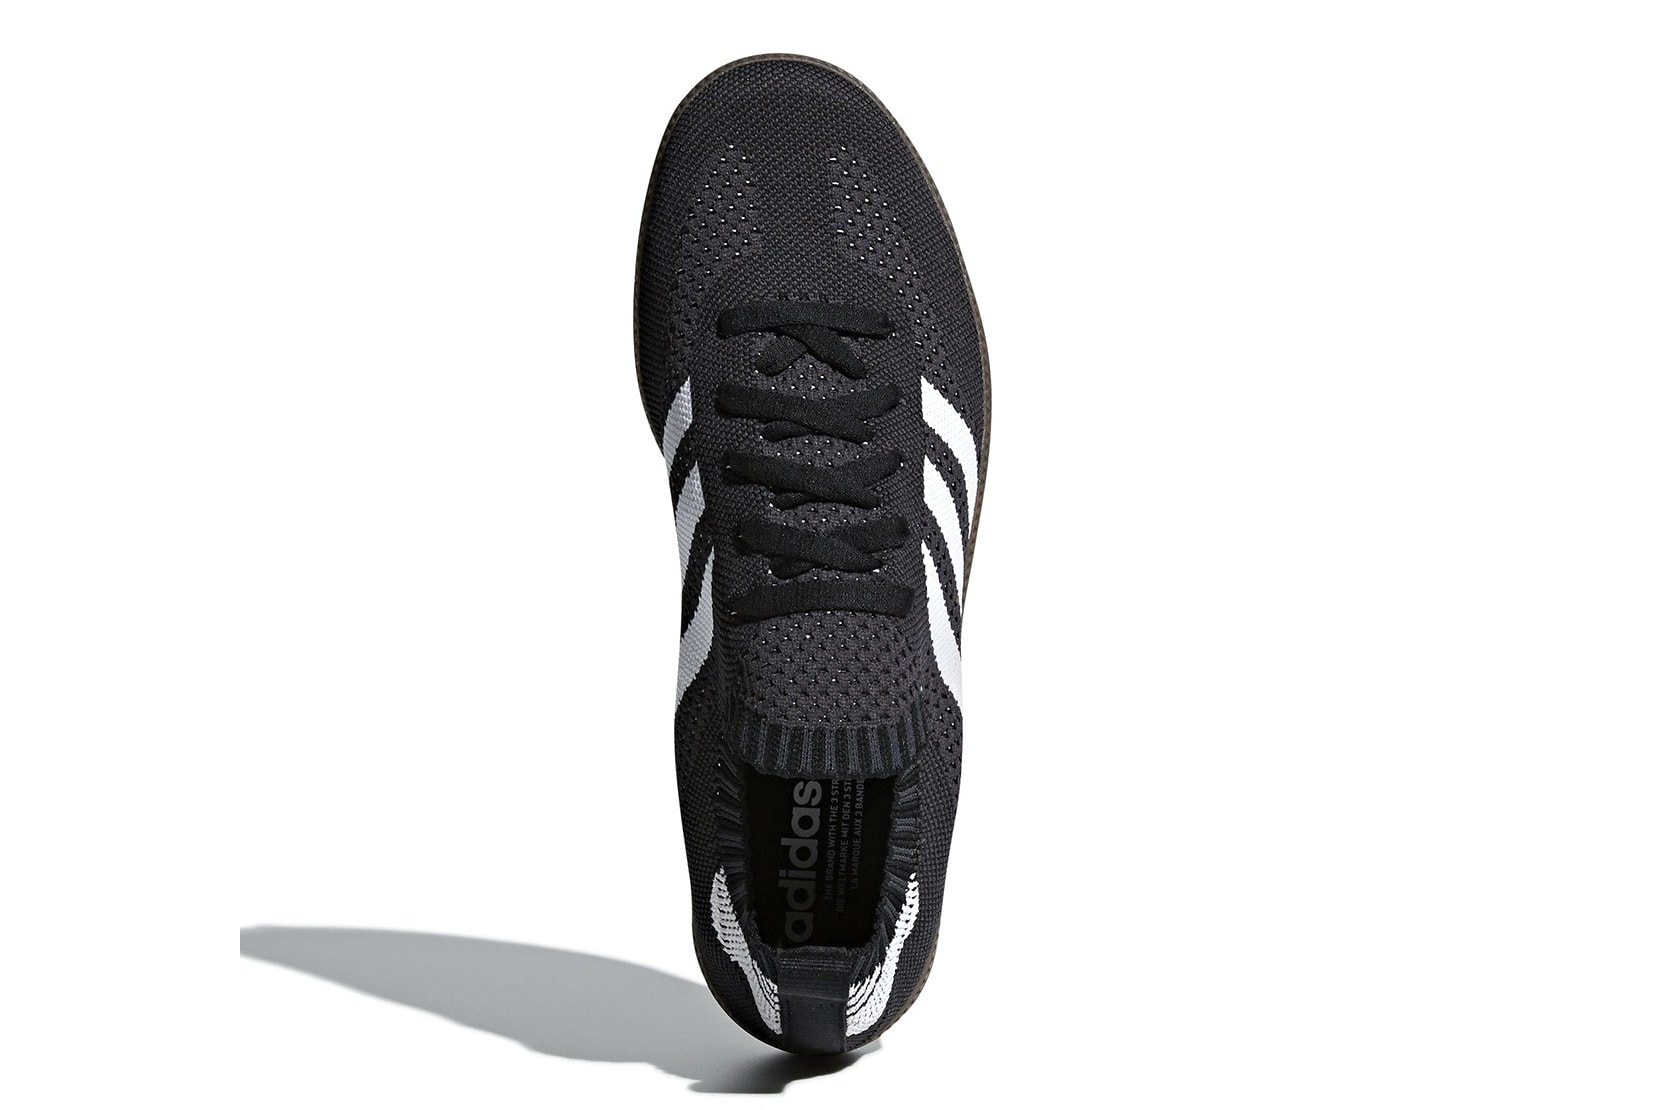 adidas Samba Primeknit black white April release info sneakers gfootwear